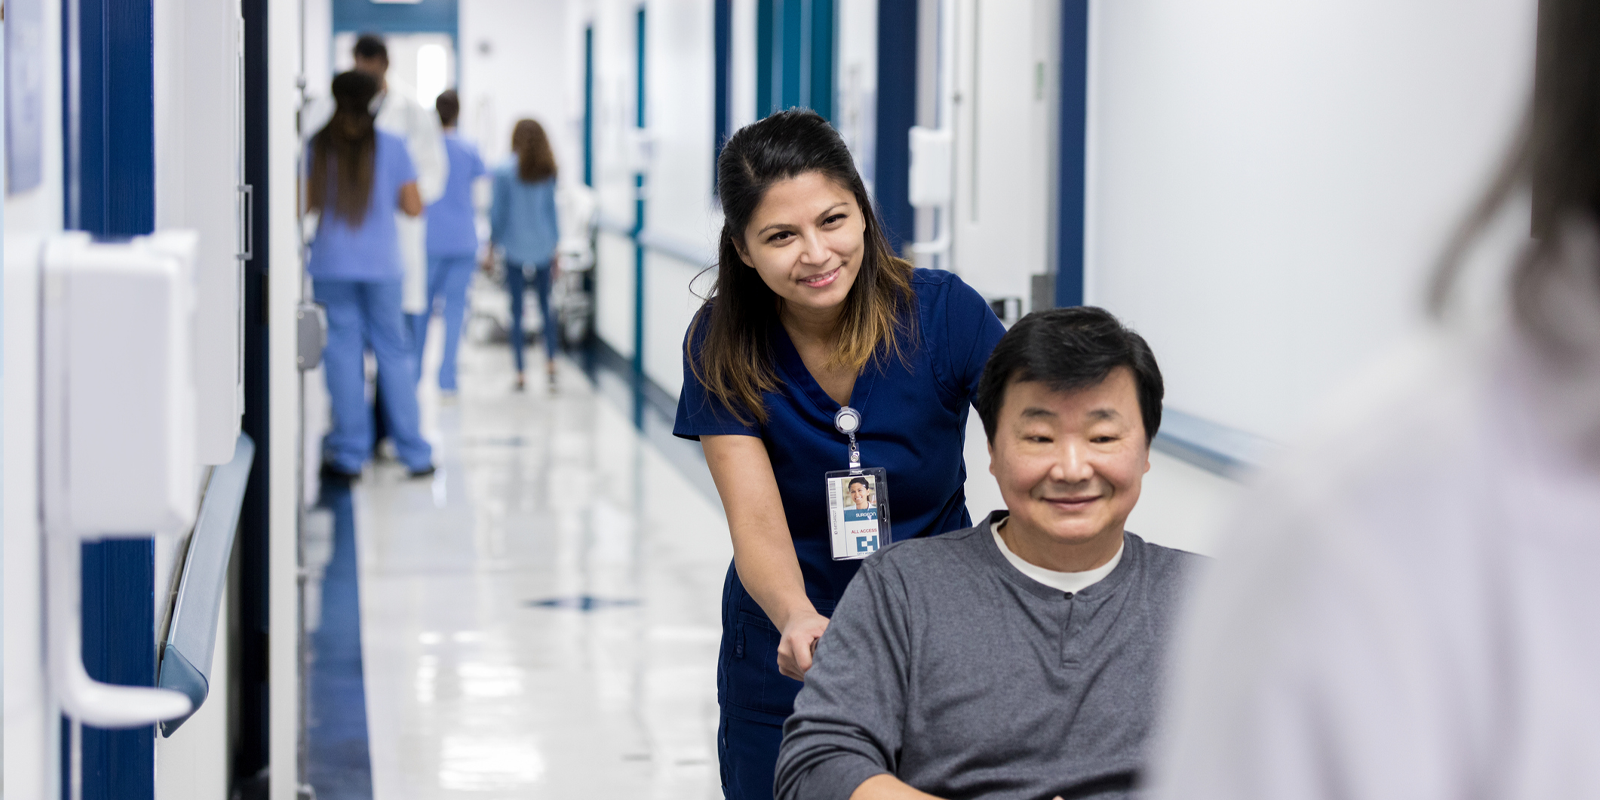 Trabajadores en reconocido hospital de Massachusetts logran primer contrato